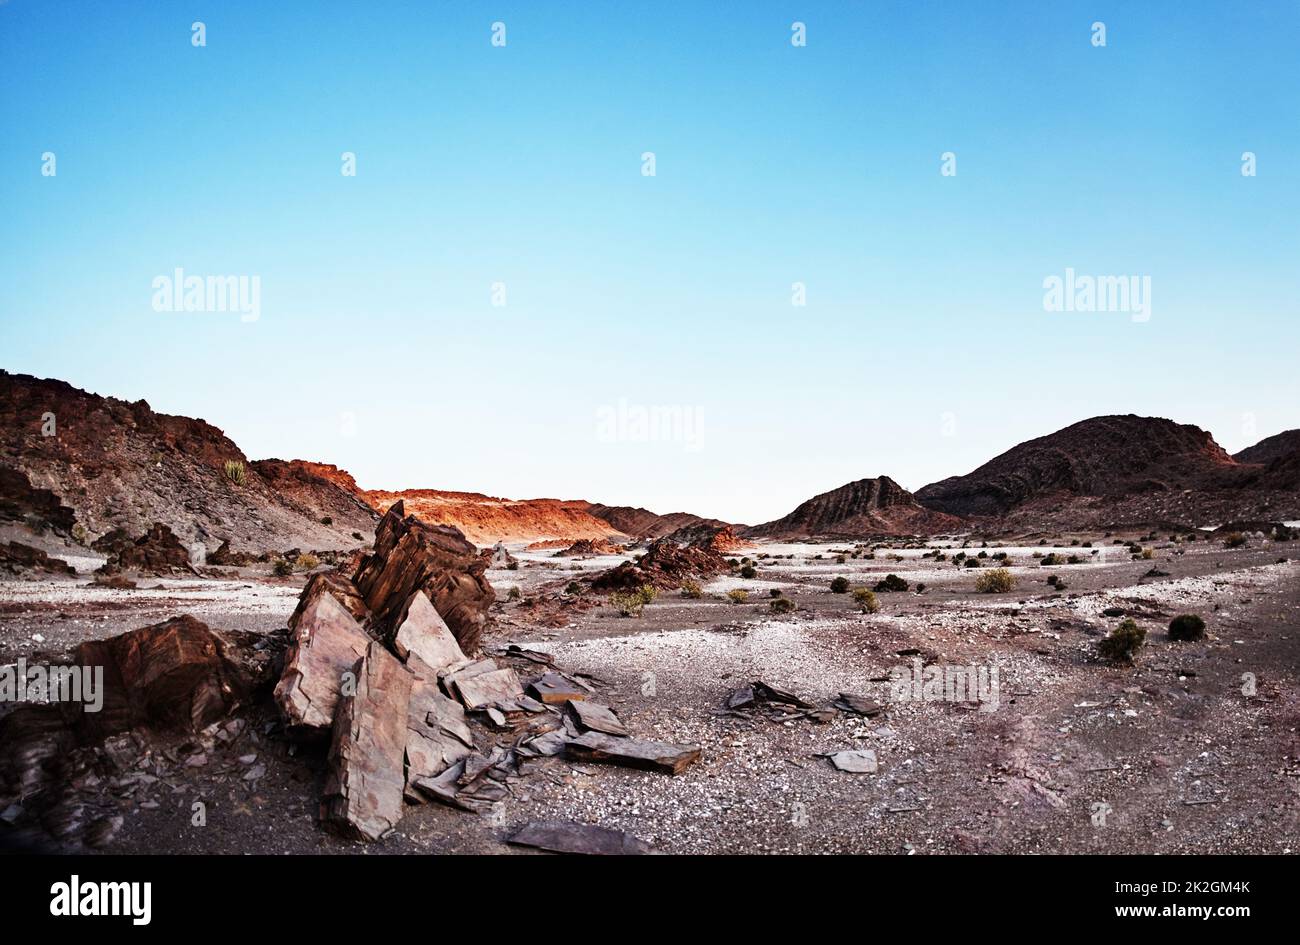 Its a vast and barren landscape. Shot of rugged desert terrain. Stock Photo